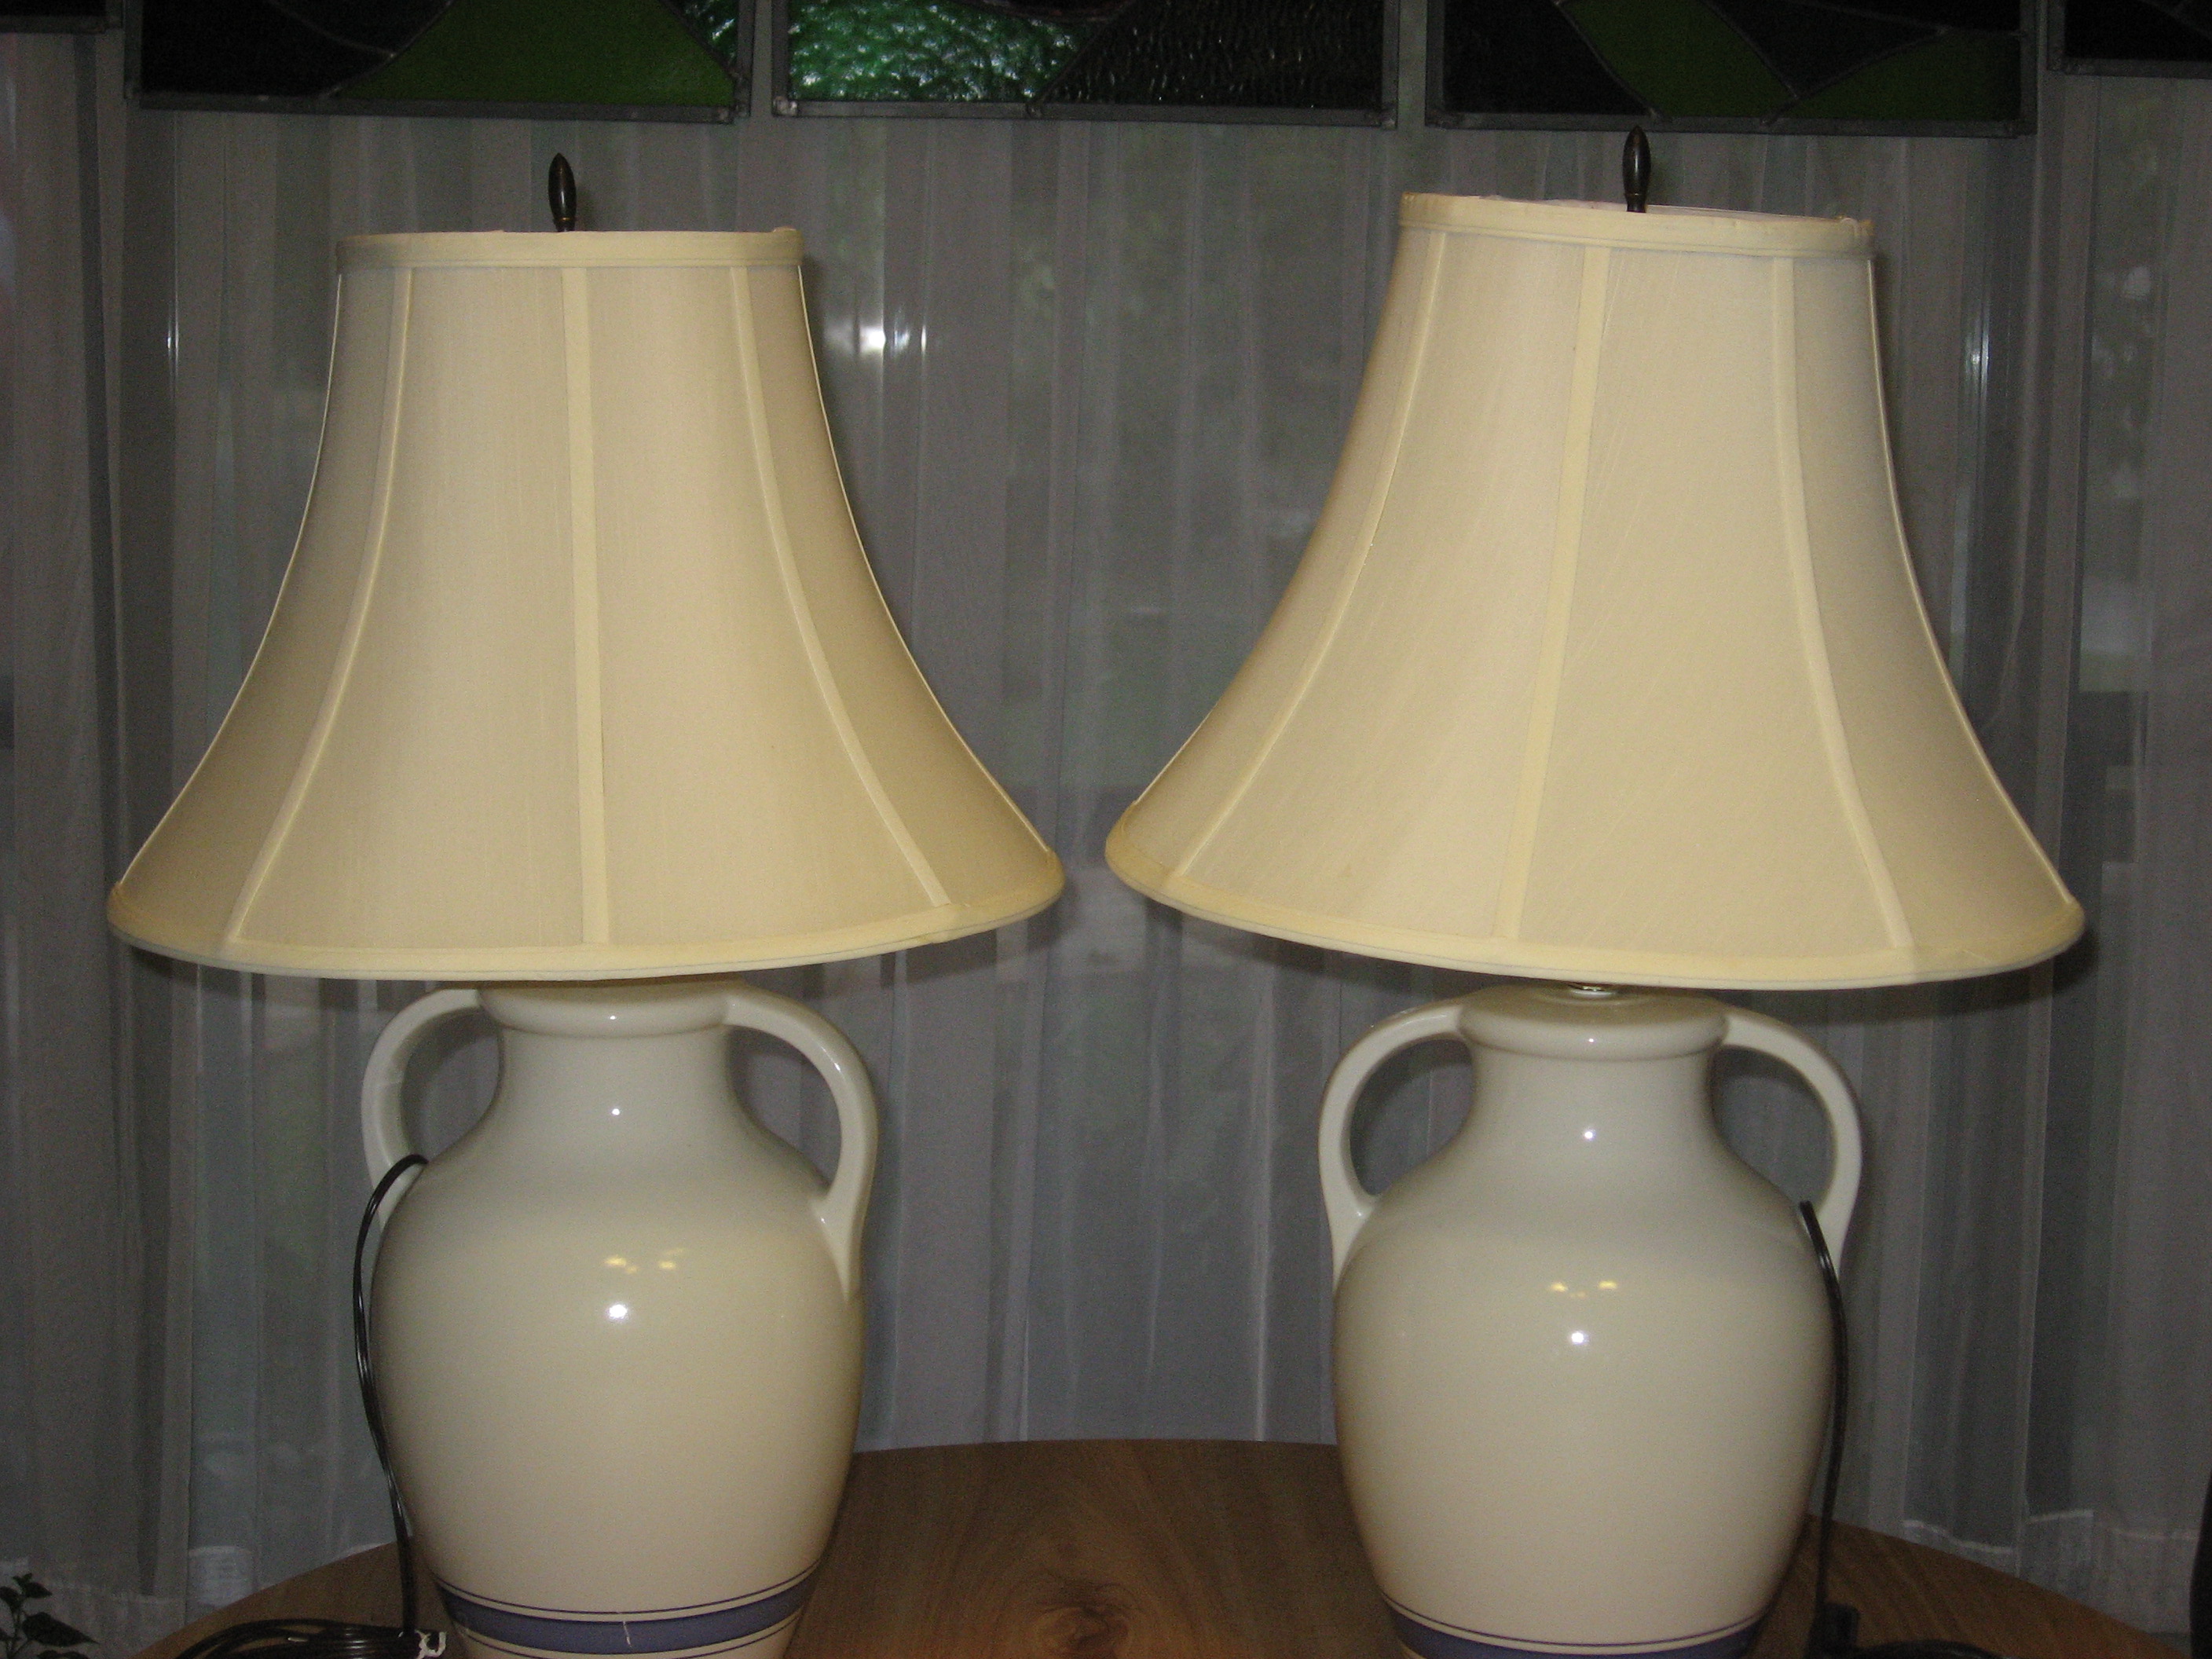 2 matching ceramic lamps